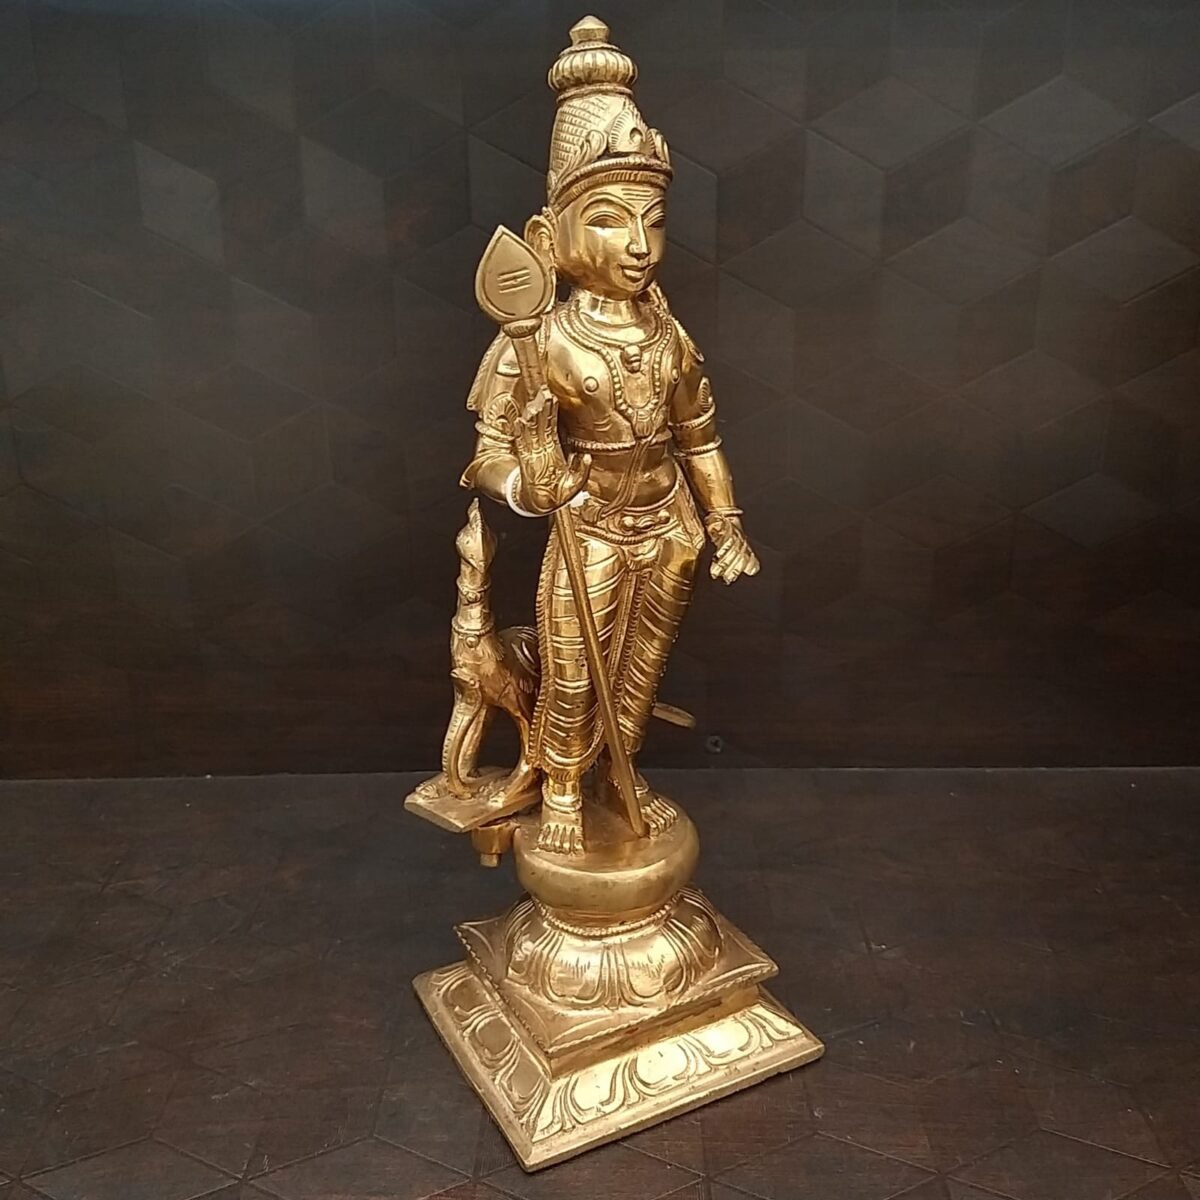 panchaloha bala murugan idol home decor pooja items gift buy online india 2268 1